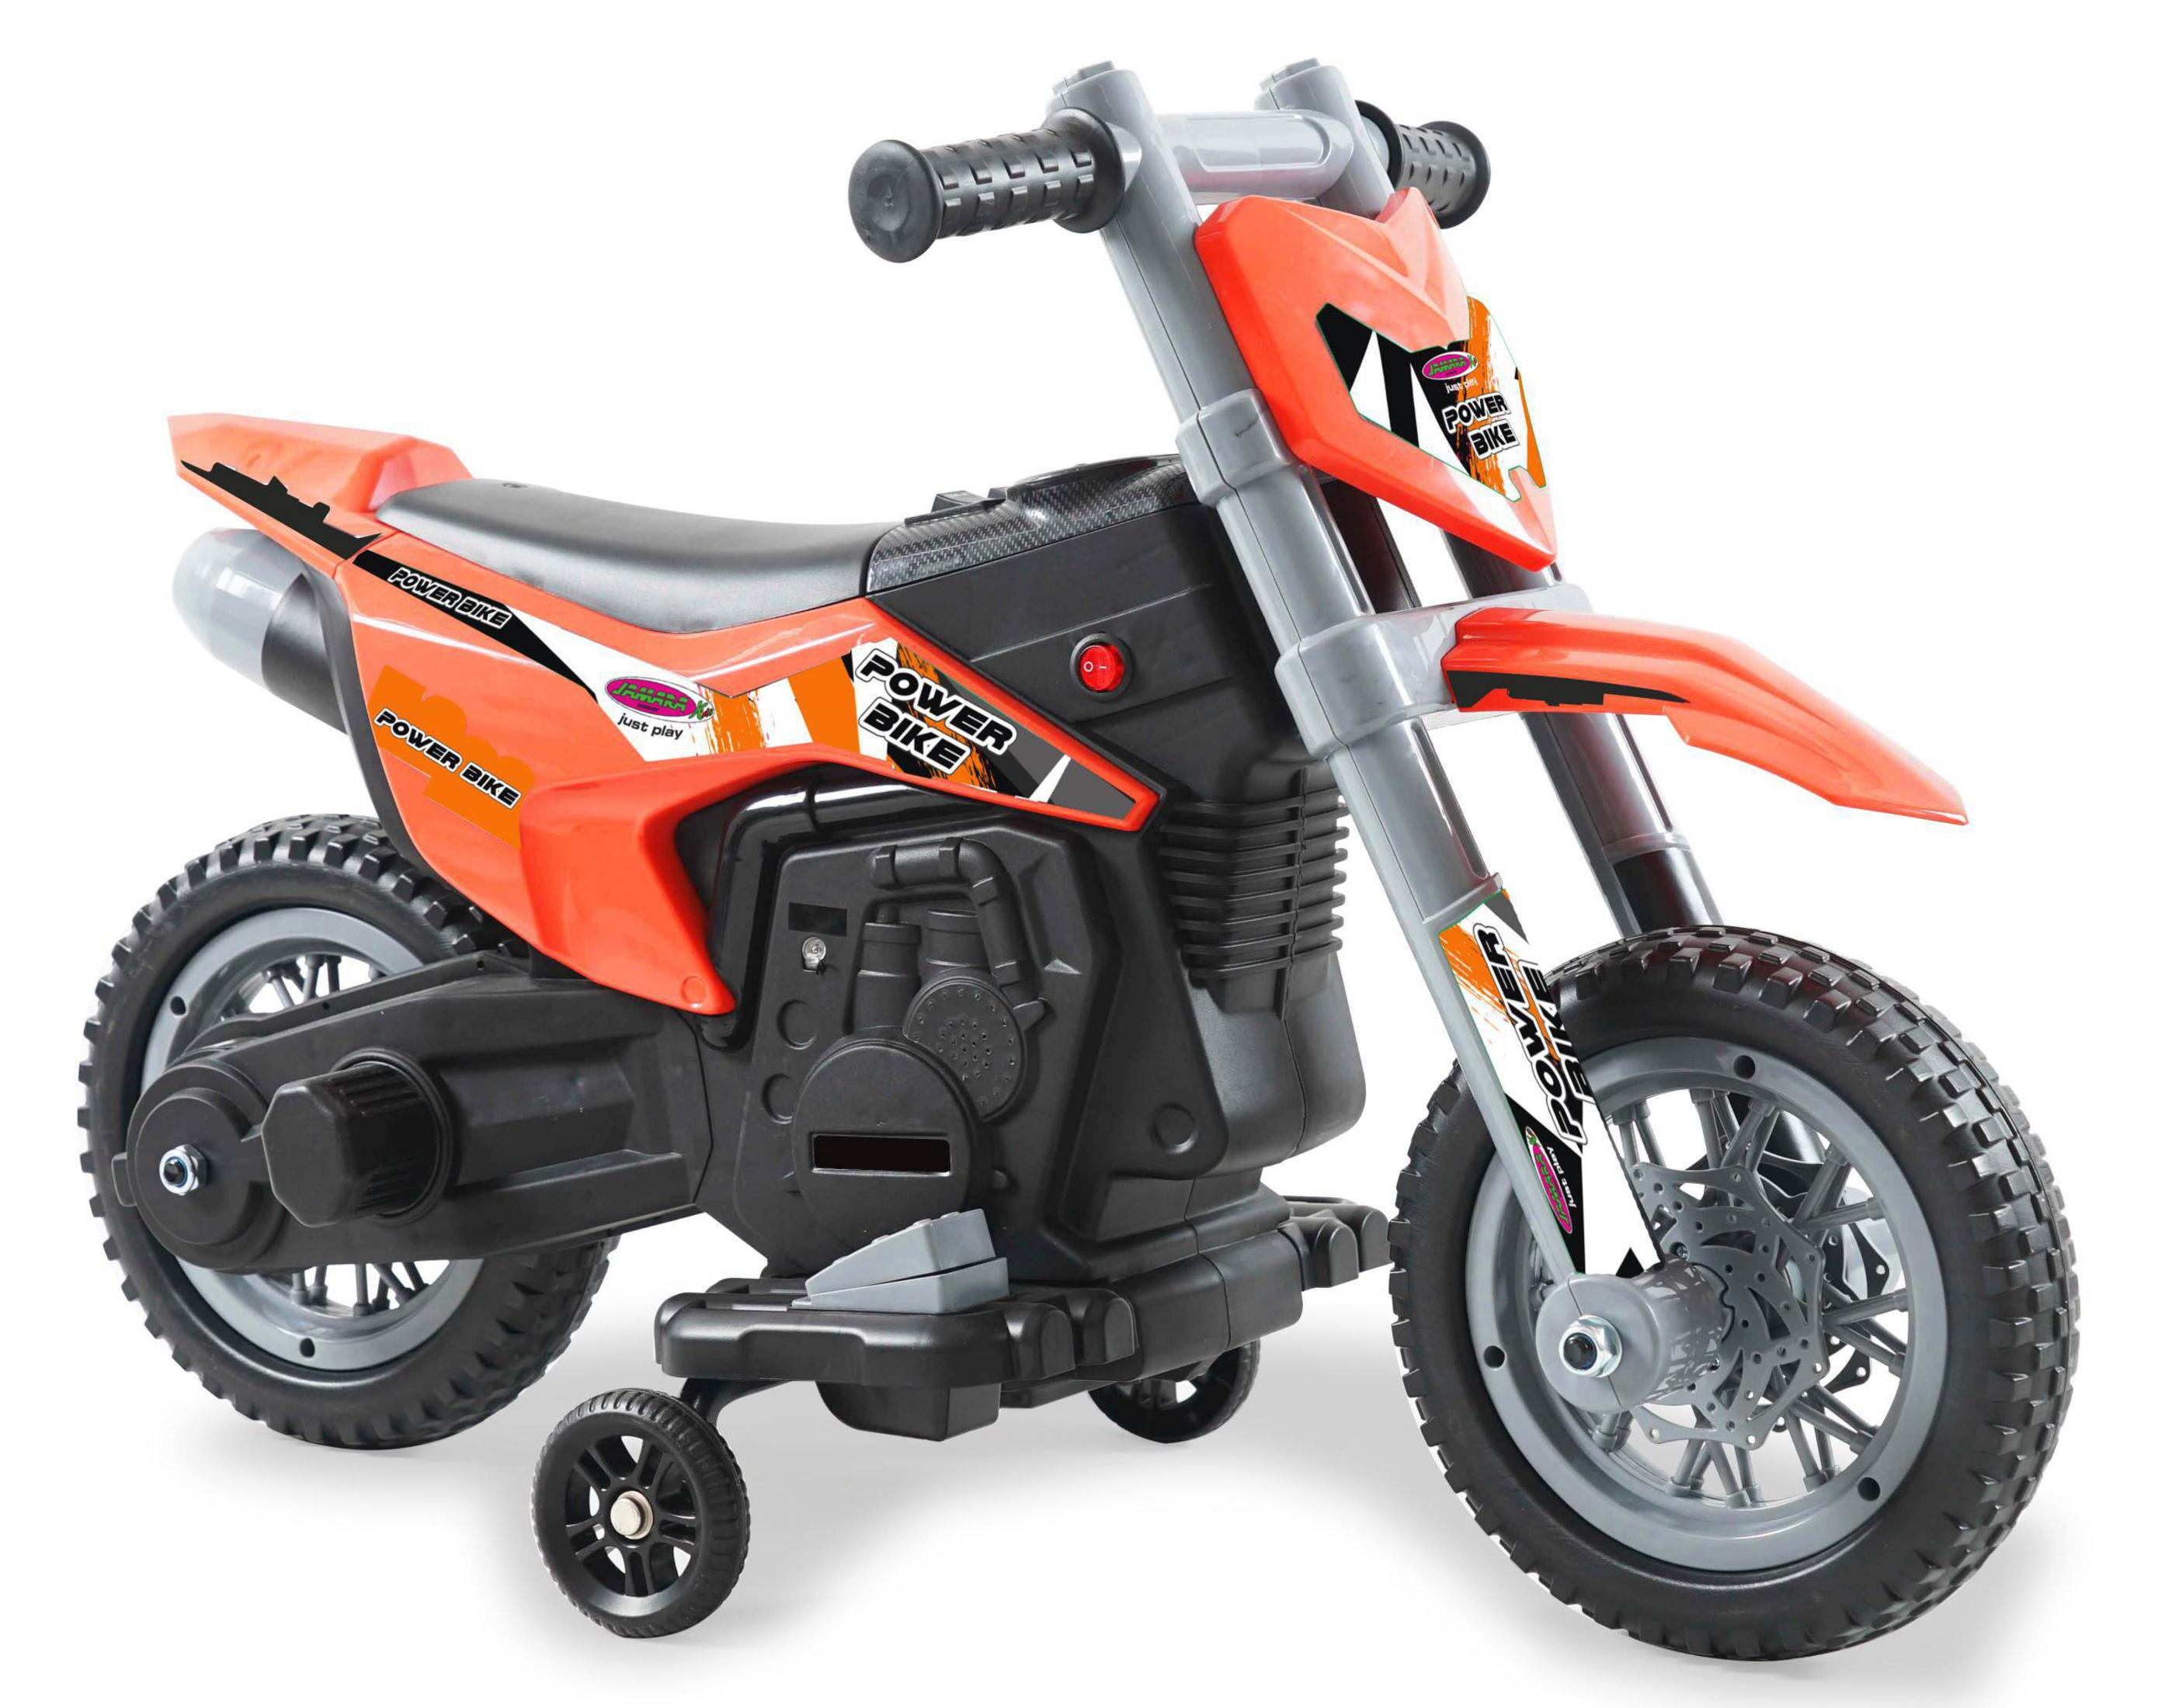 JAMARA 460679 MOTORRAD RIDE-ON Orange ORANGE POWER BIKE Kinderfahrzeug, 6V Ride-On